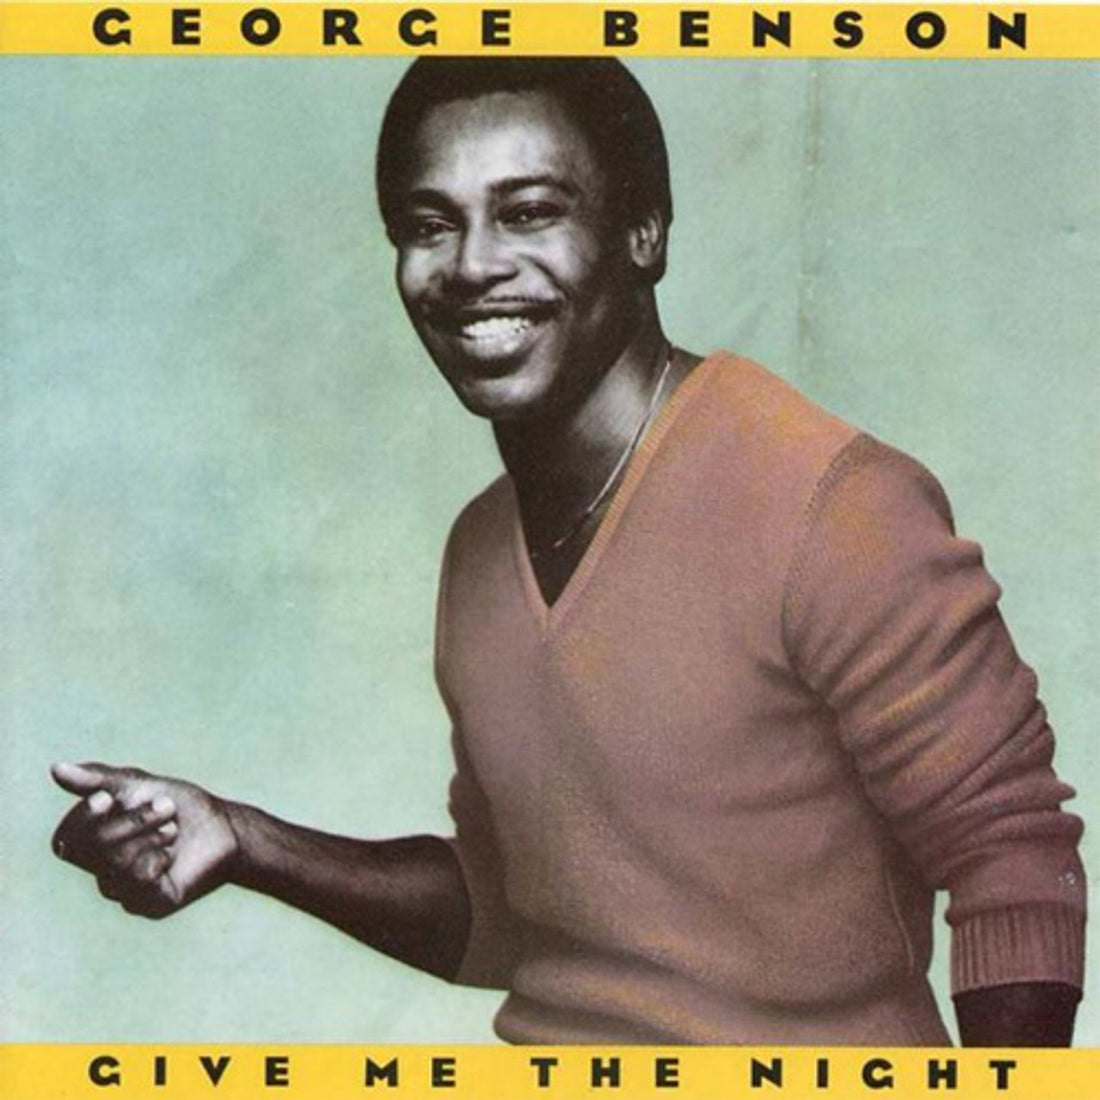 George Benson | Give Me the Night